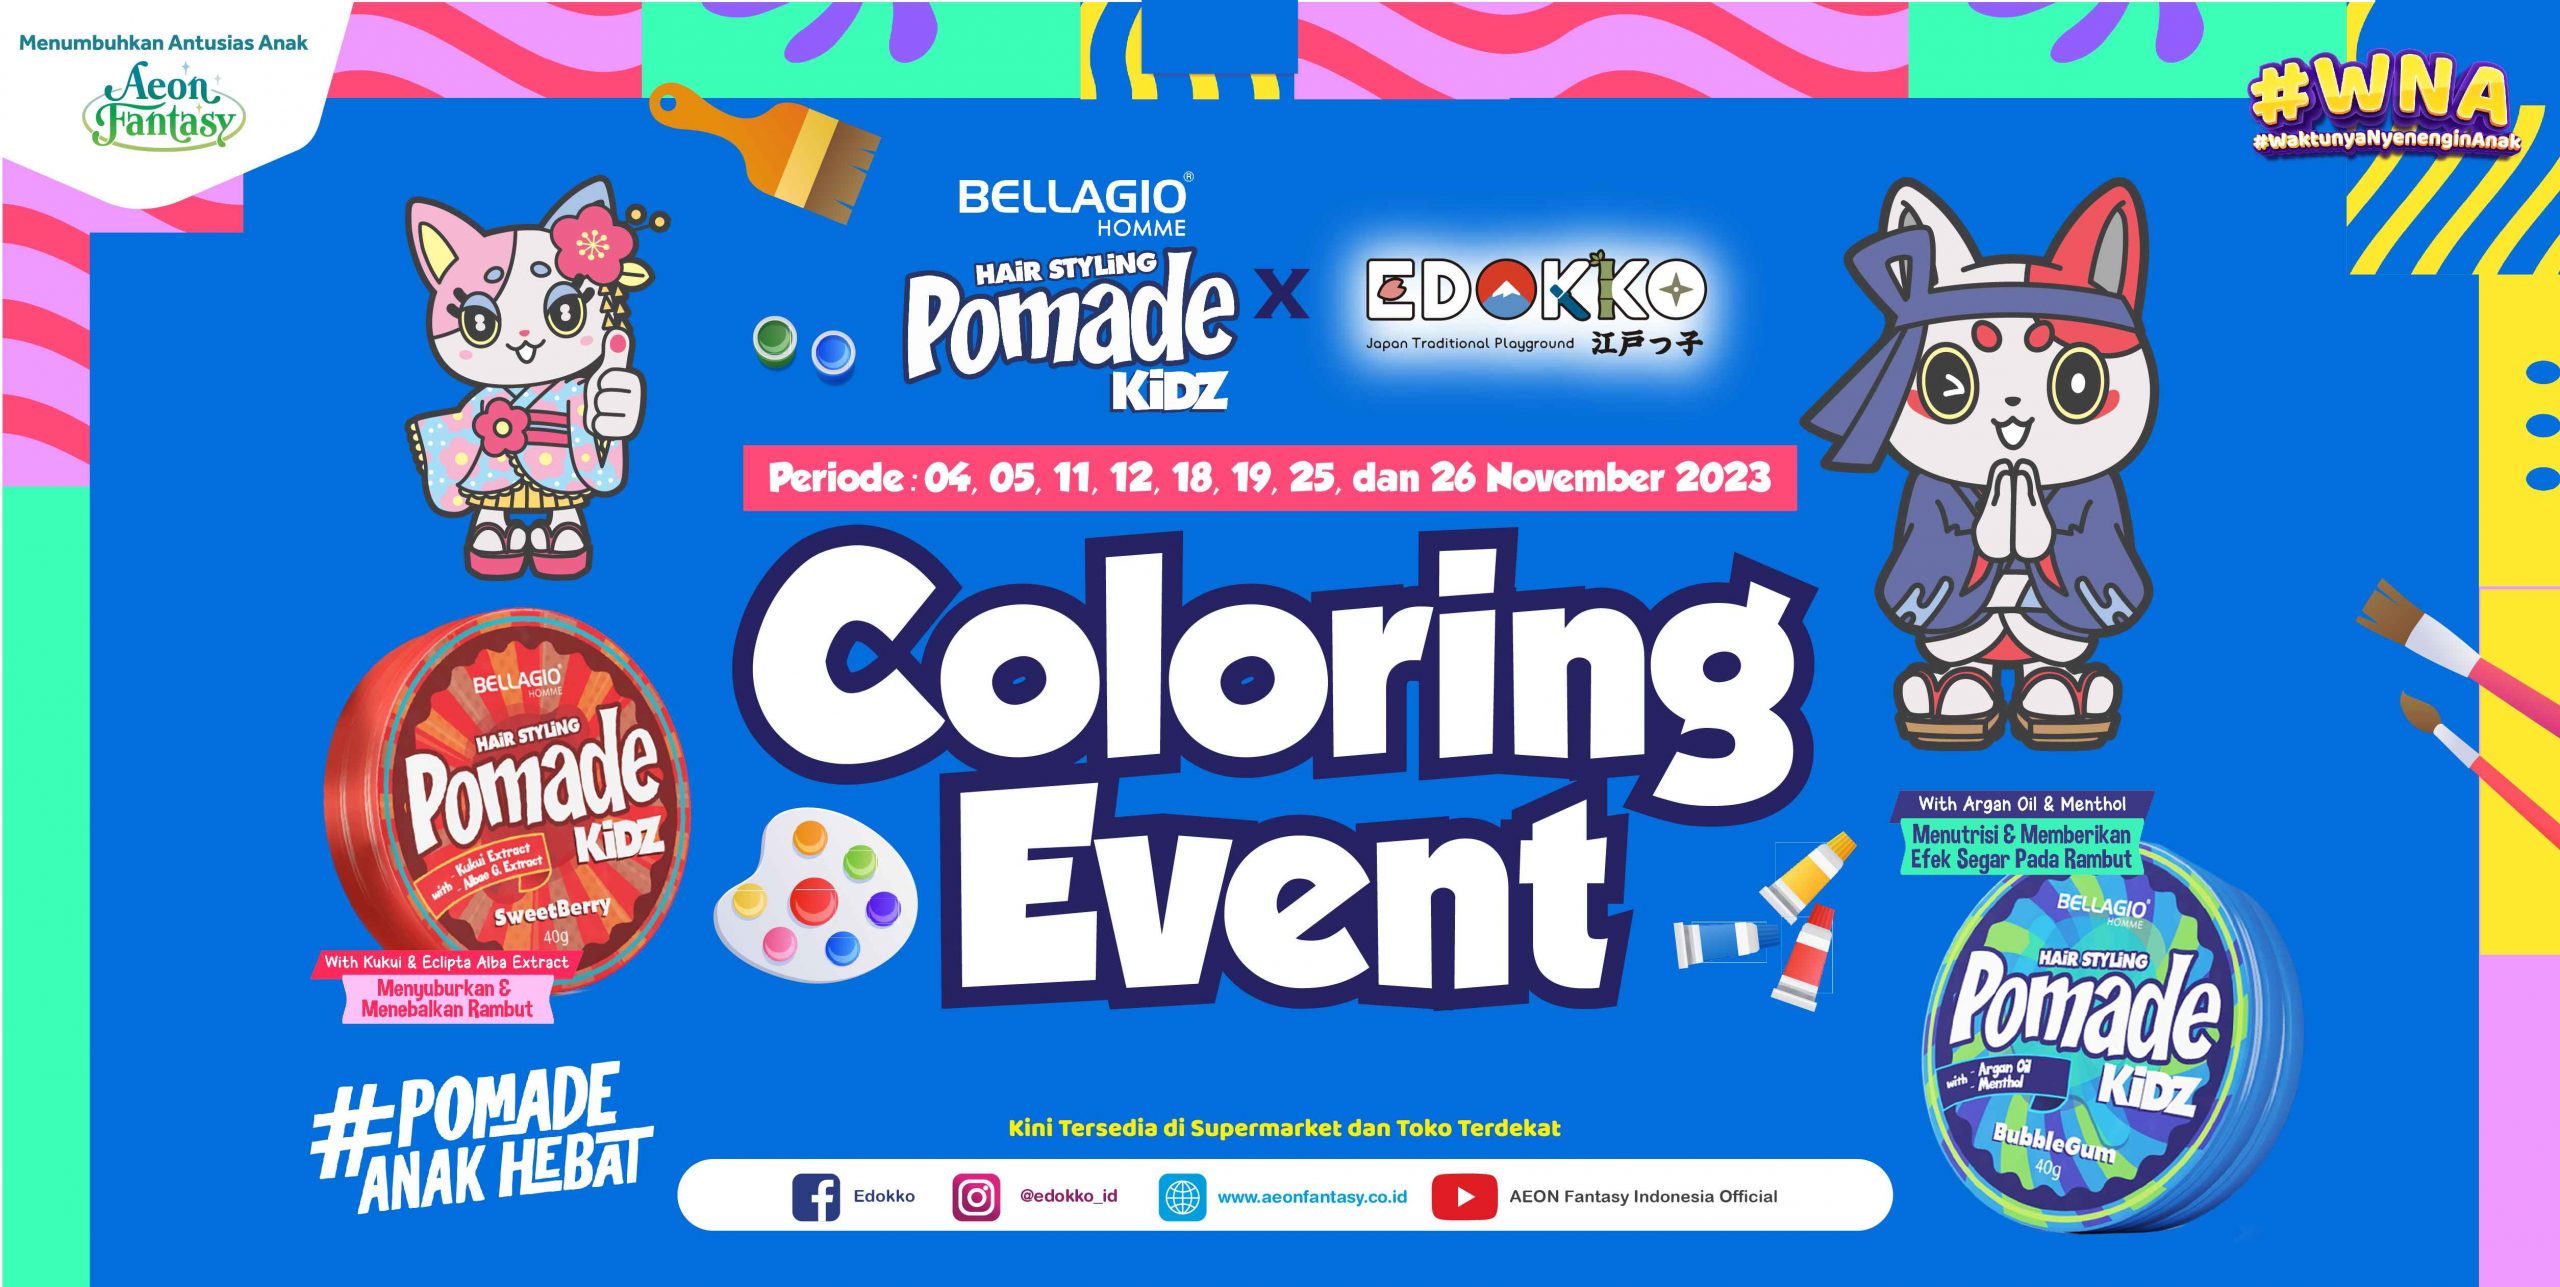 [Edokko] Coloring Event Edokko X Bellagio Pomade Kidz